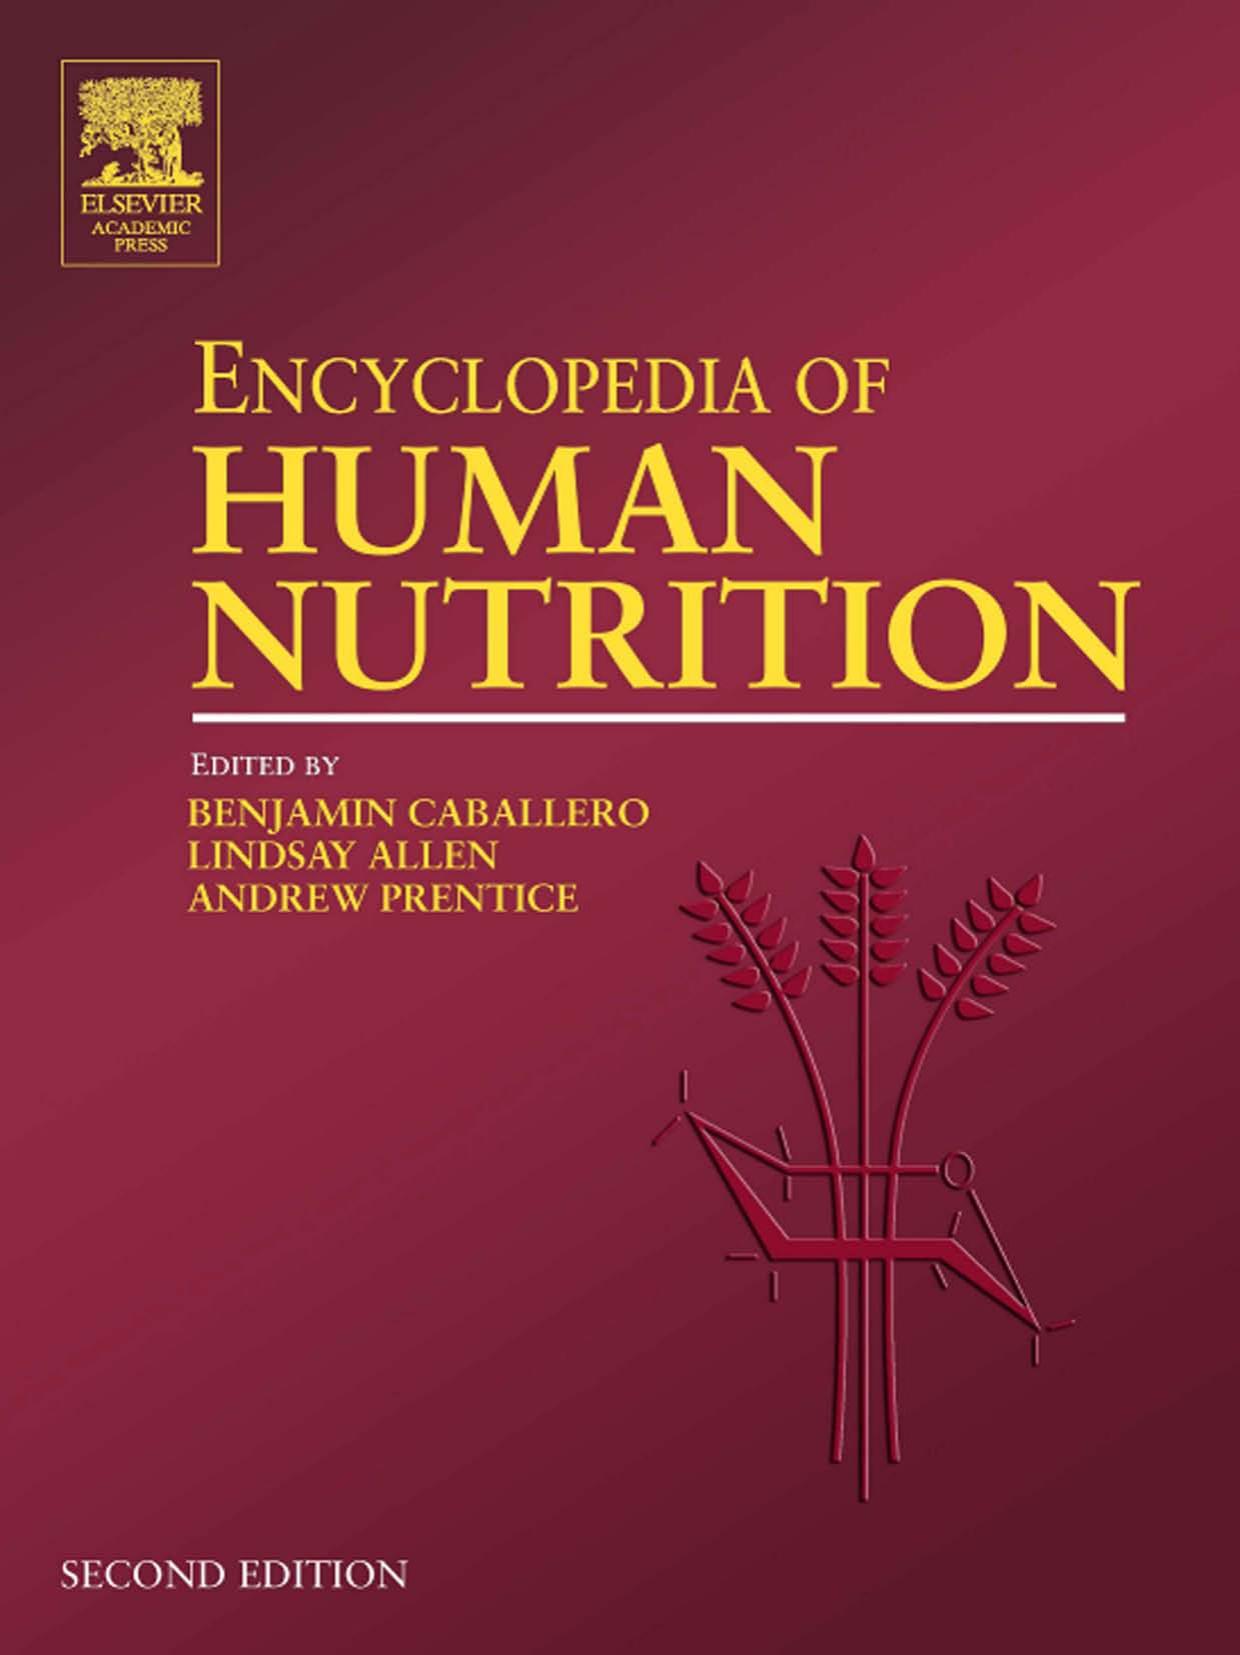 Encyclopedia of Human Nutrition by Benjamin Caballero, Lindsay Allen, Andrew Prentice 2005